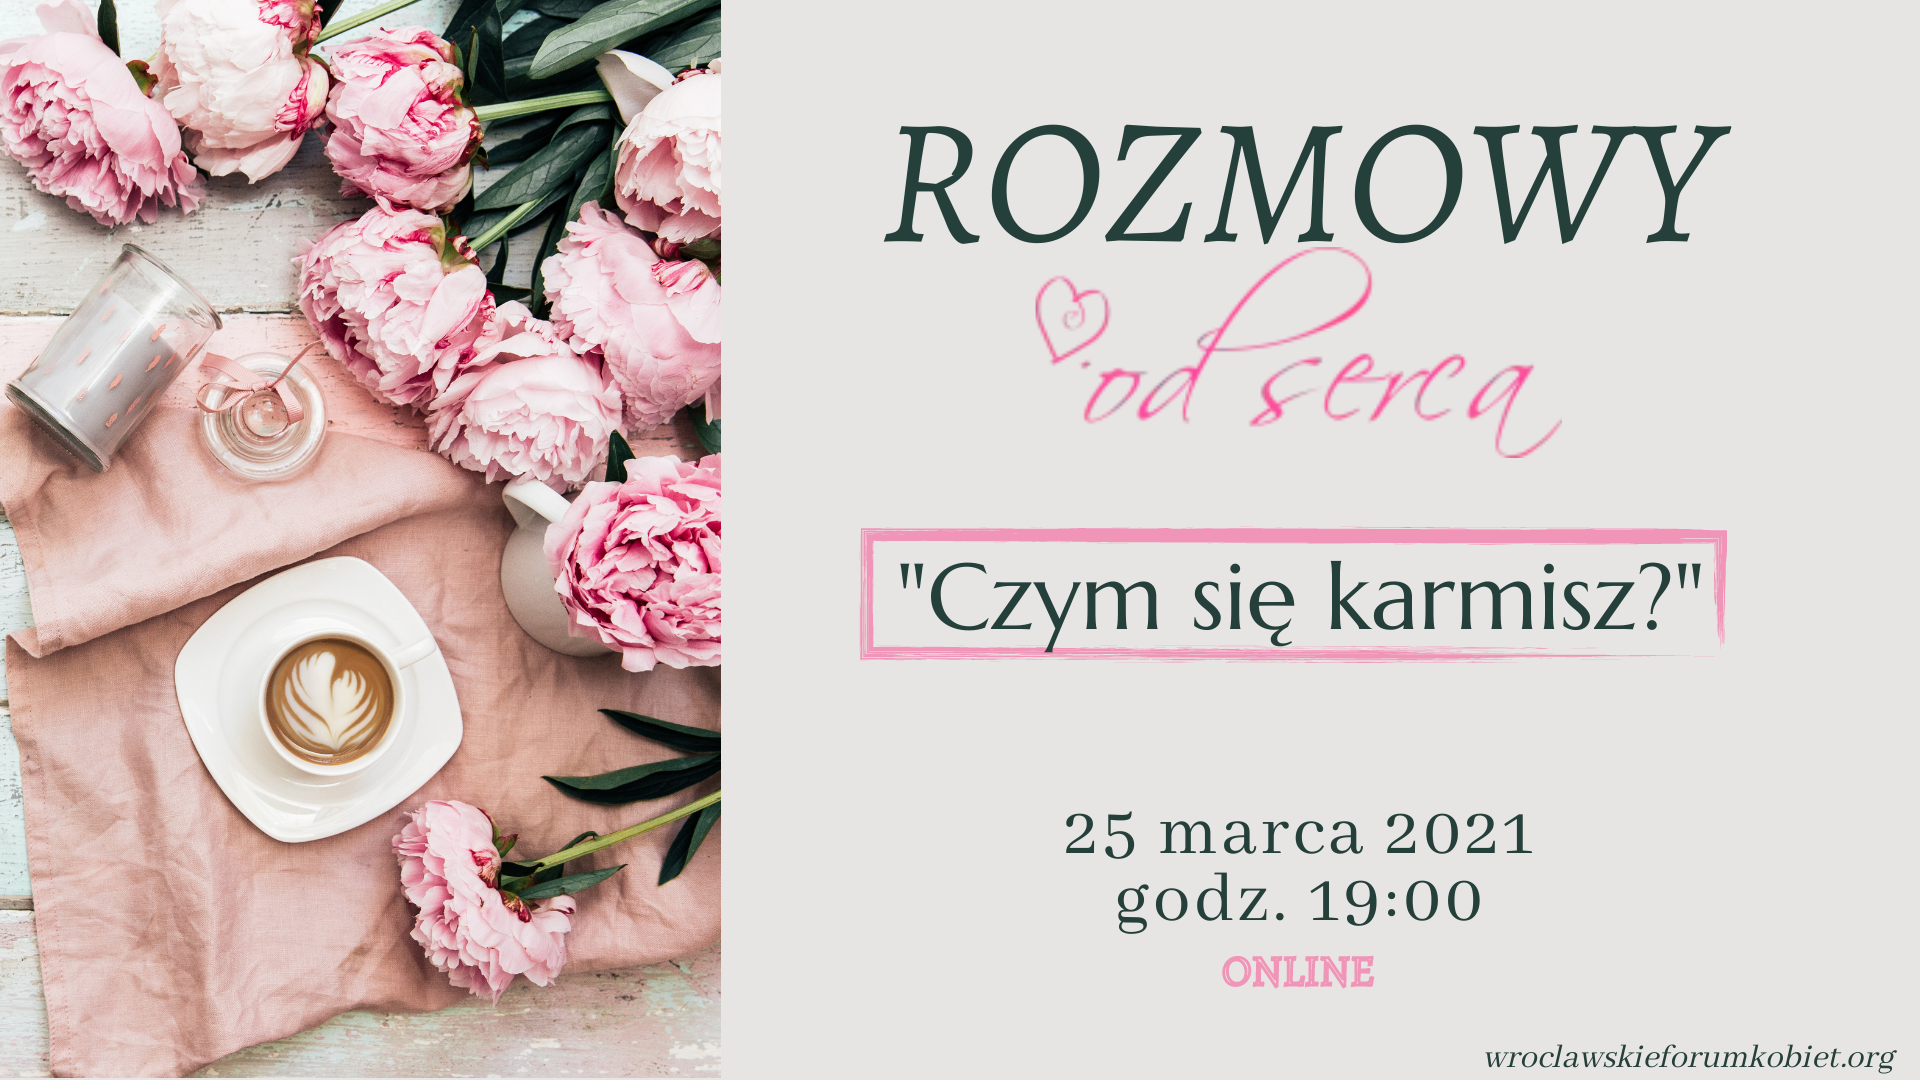 You are currently viewing Rozmowy OdSerca – spotkanie online